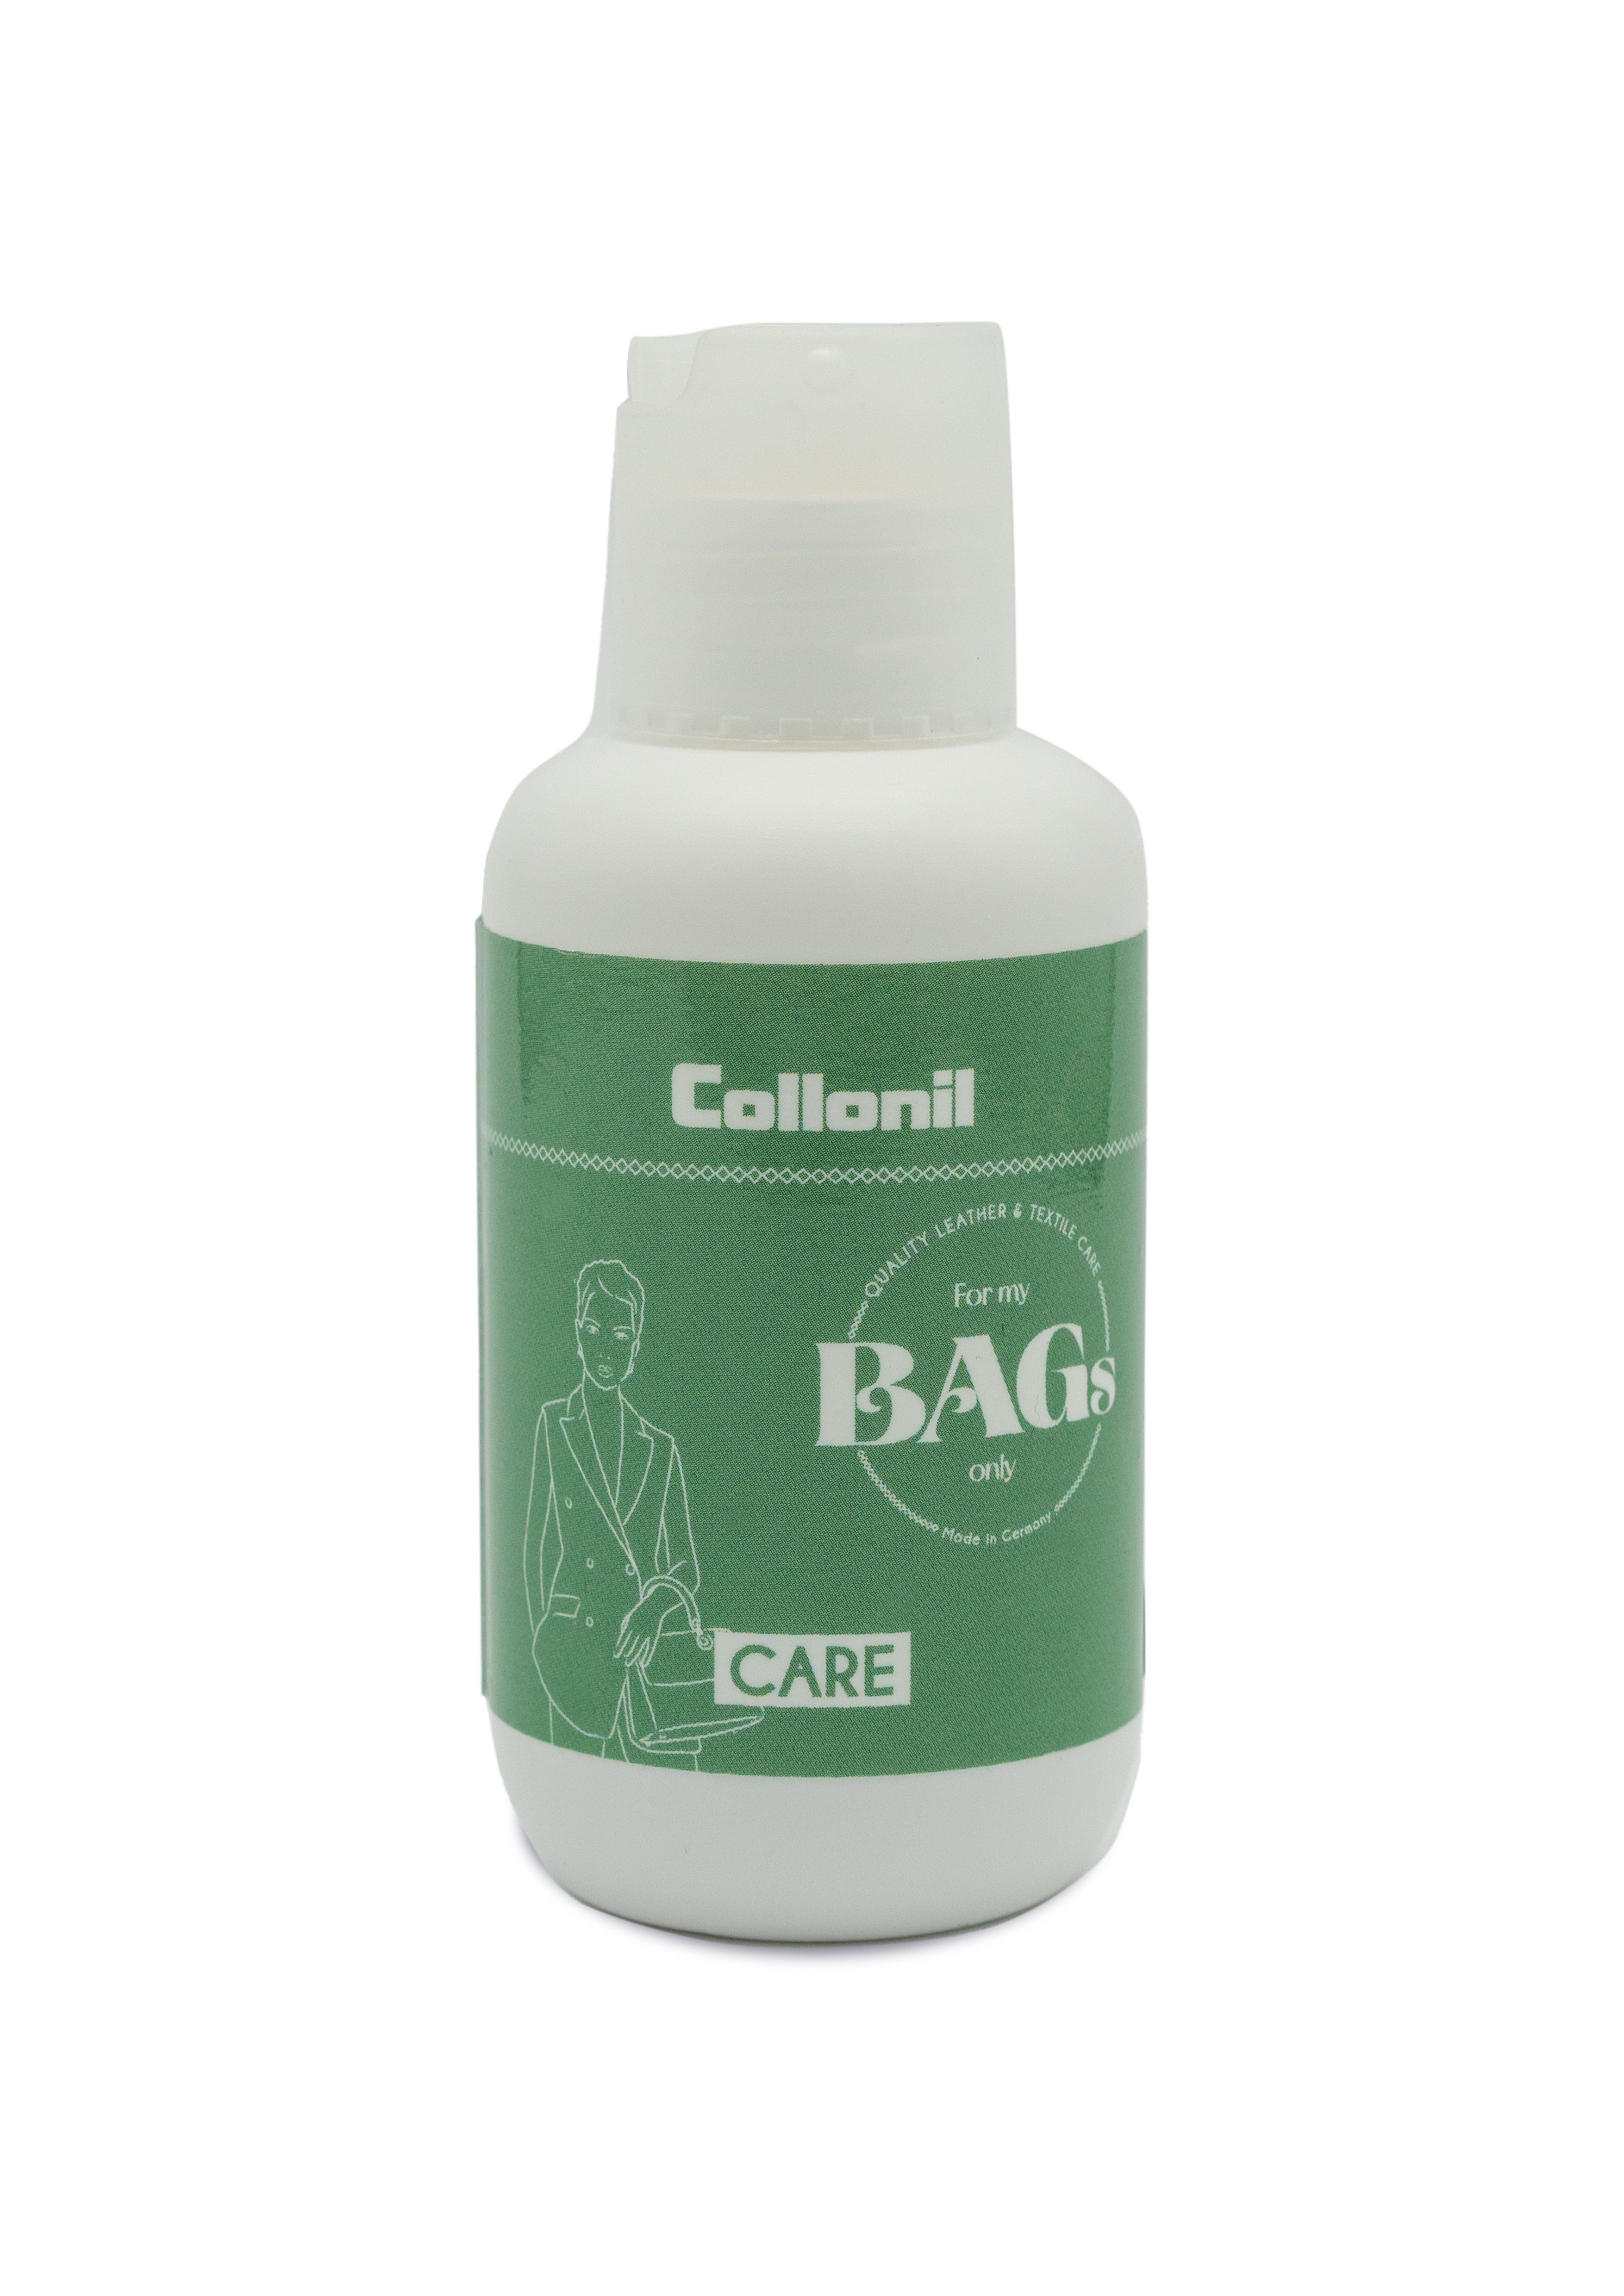 Collonil Handtasche myBAGs Care - Intensive Pflege, regenerierend und nährend